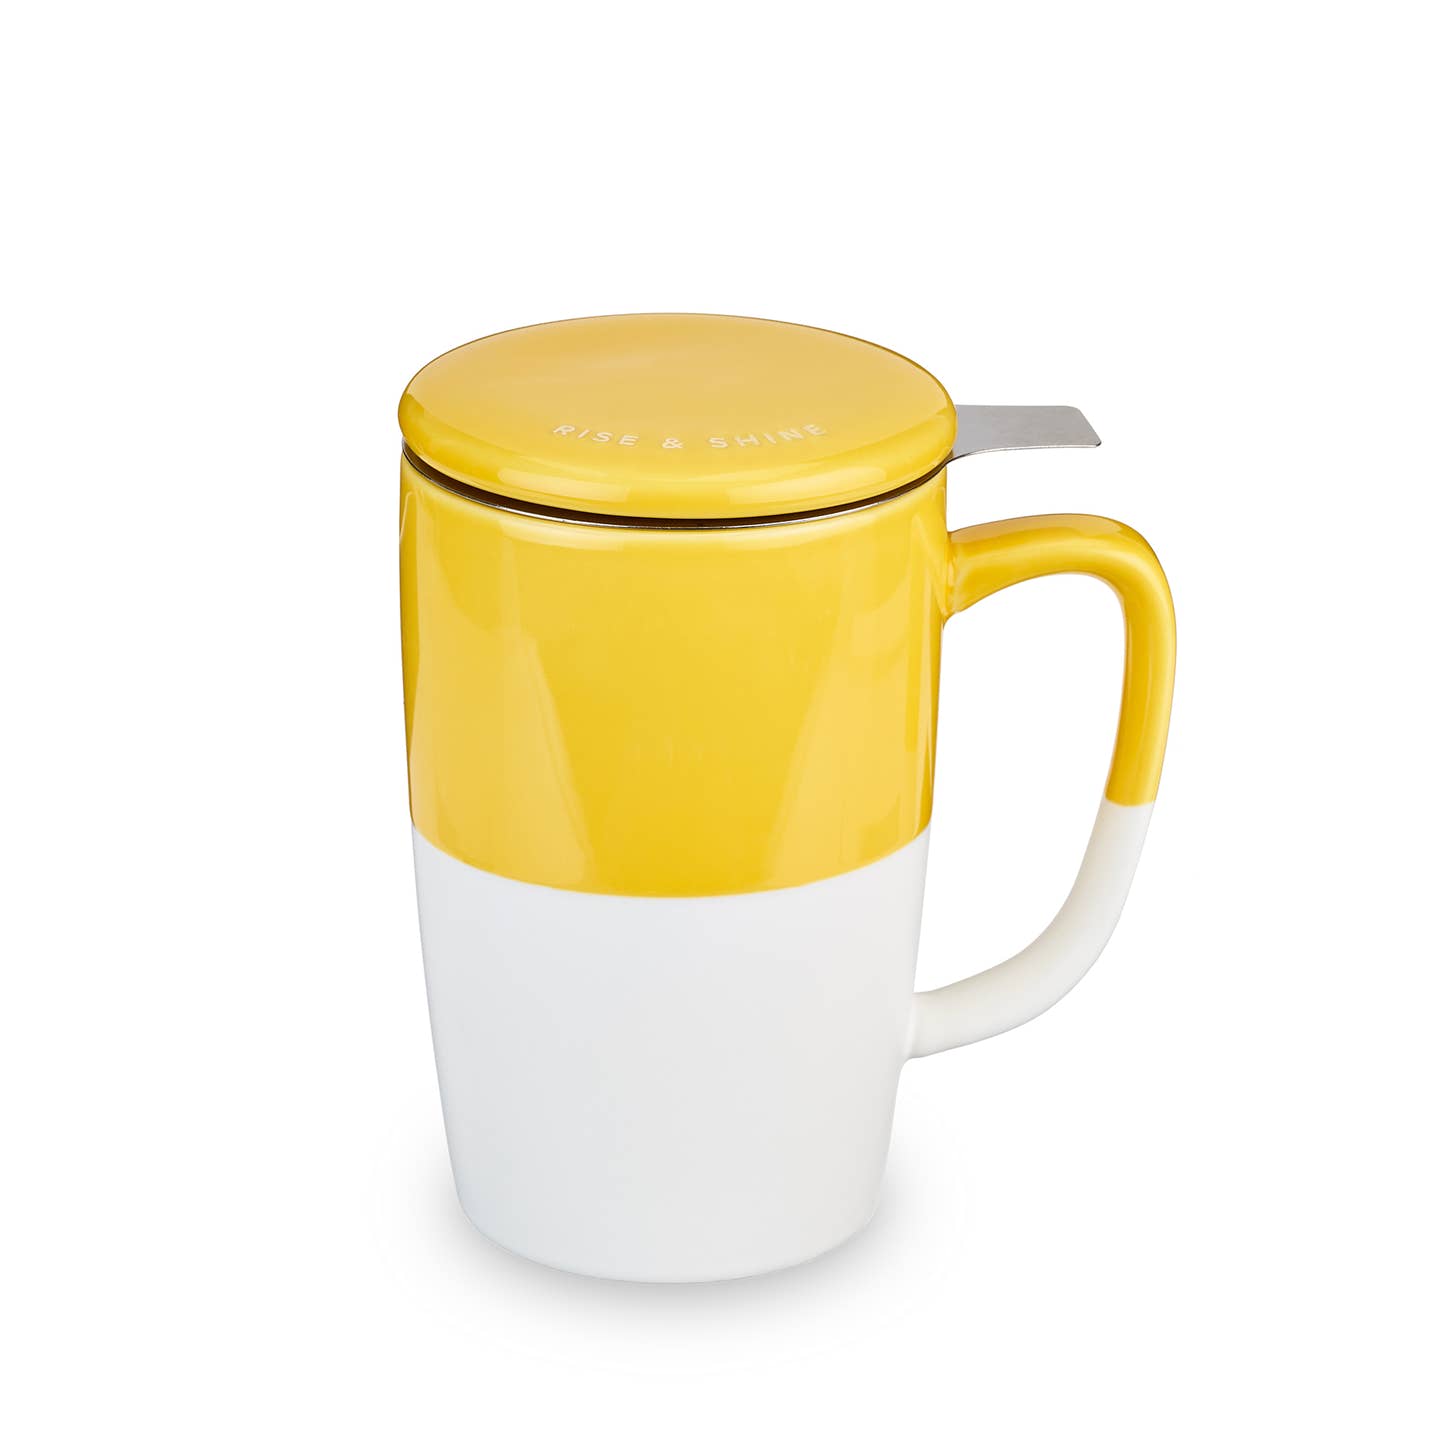 Morning Tea Mug with Infuser